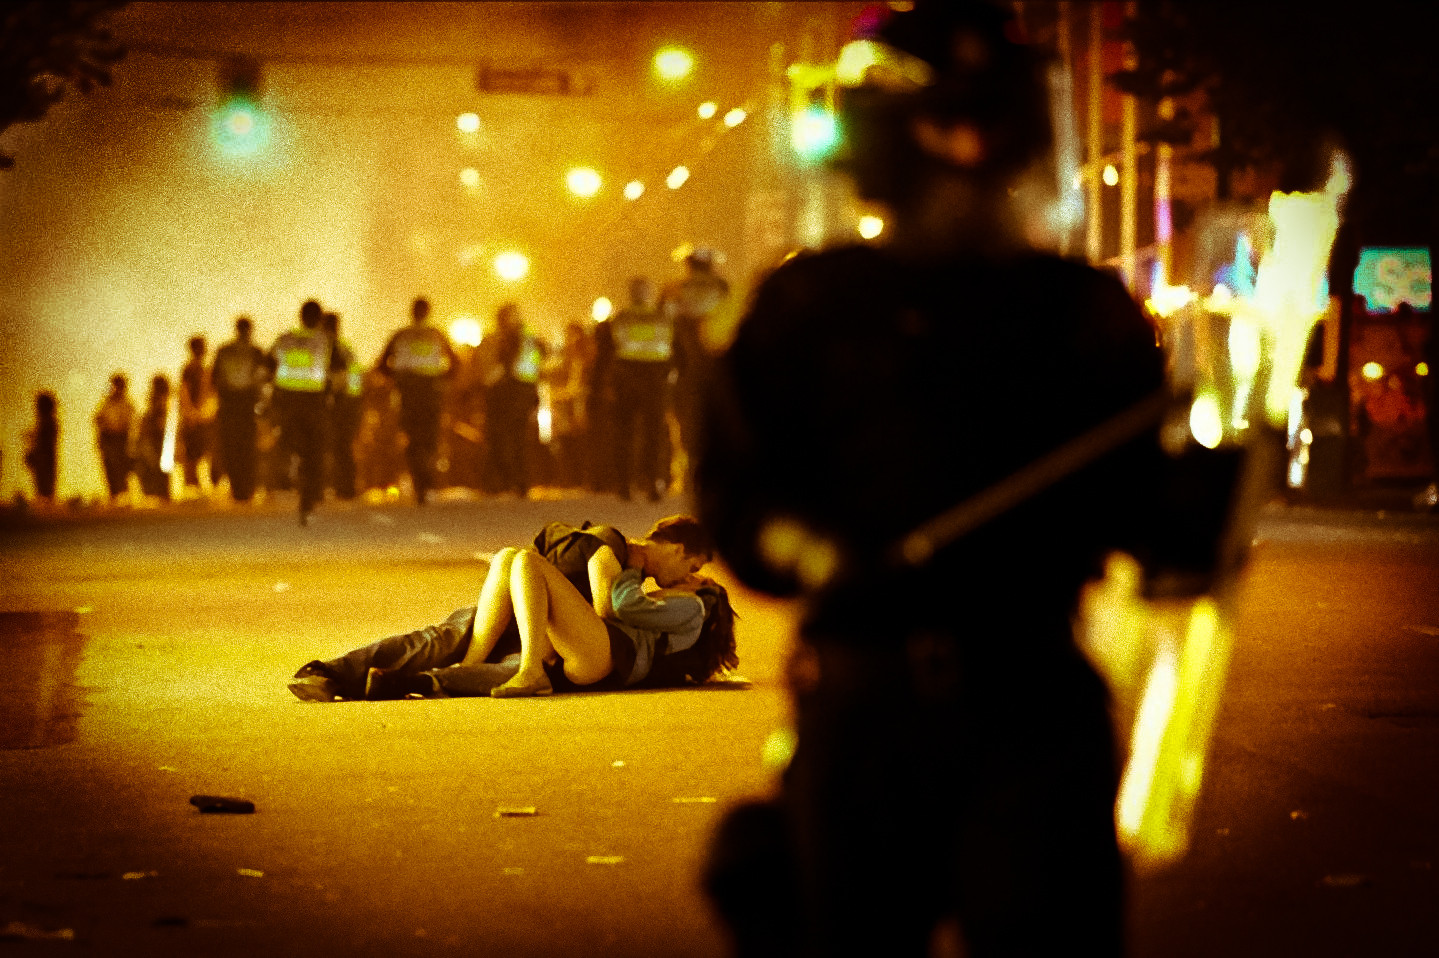 https://blogger.googleusercontent.com/img/b/R29vZ2xl/AVvXsEjYo51uOVRICdrBsMnNLRiDybjczXbyHdy4vmAXPcB86xrqtwzl6MPC8unI8sYqzUY3Nhzaj6MaQsV0MdnesiO79CSjAN4mP-iSlyHgnqcE4Fmt4iOIATYEVG2-p9hpKhAeWEQ3EILG8WE/s1600/Vancouver+Riots+Couple%252C+Vancouver+Lovers%252C+Kissing+couple.png